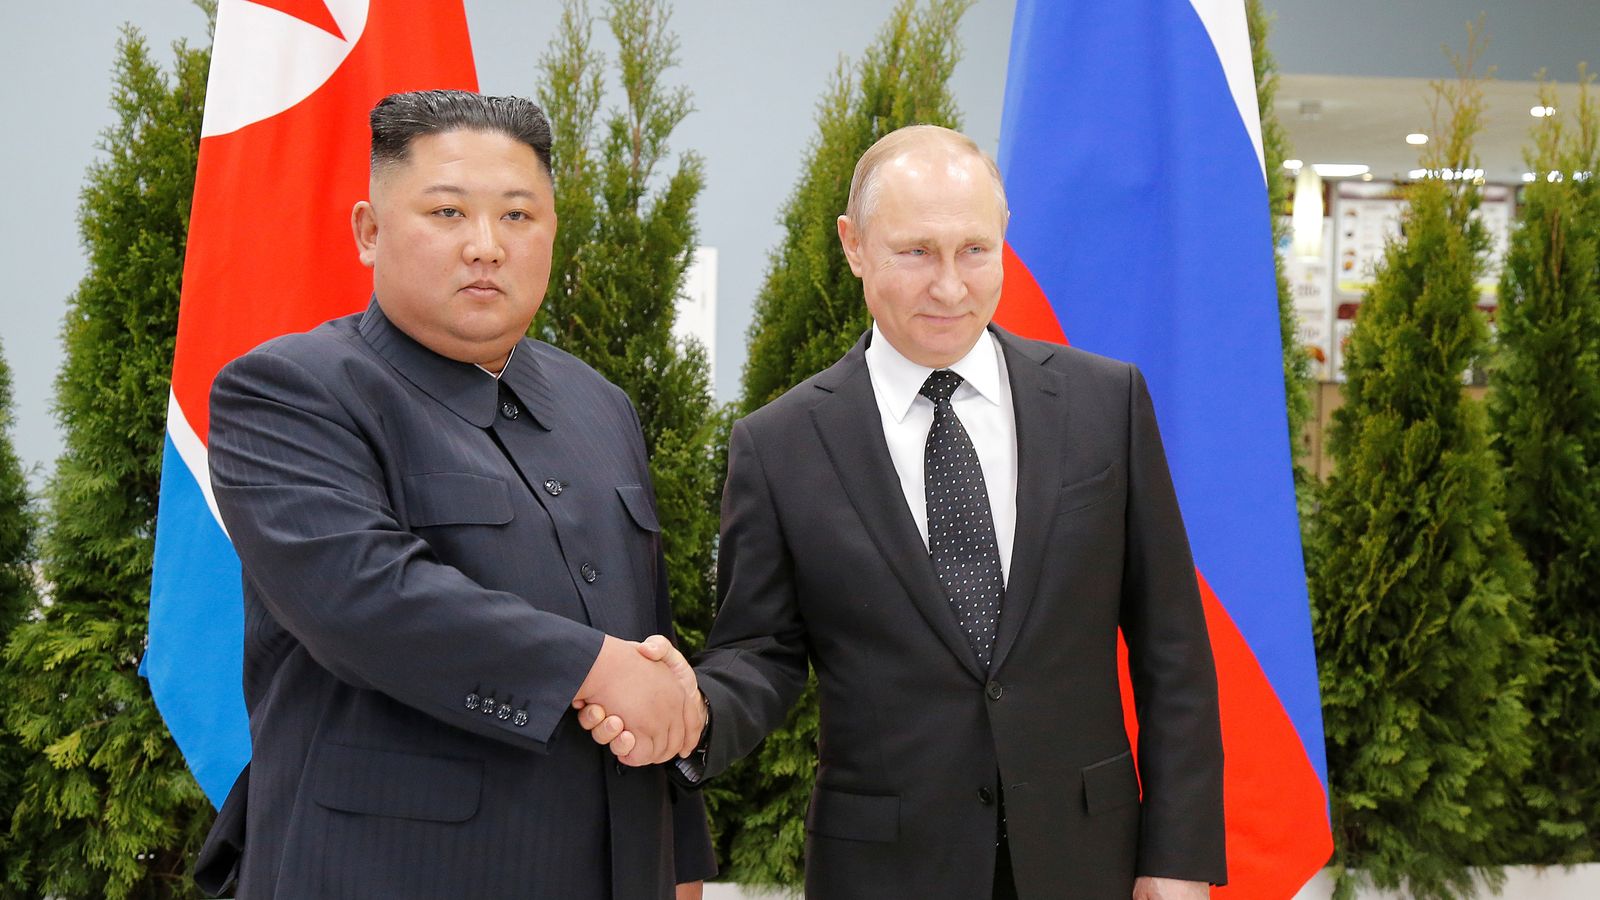 Kim Jong Un and Vladimir Putin meet for first summit in Vladivostok ...